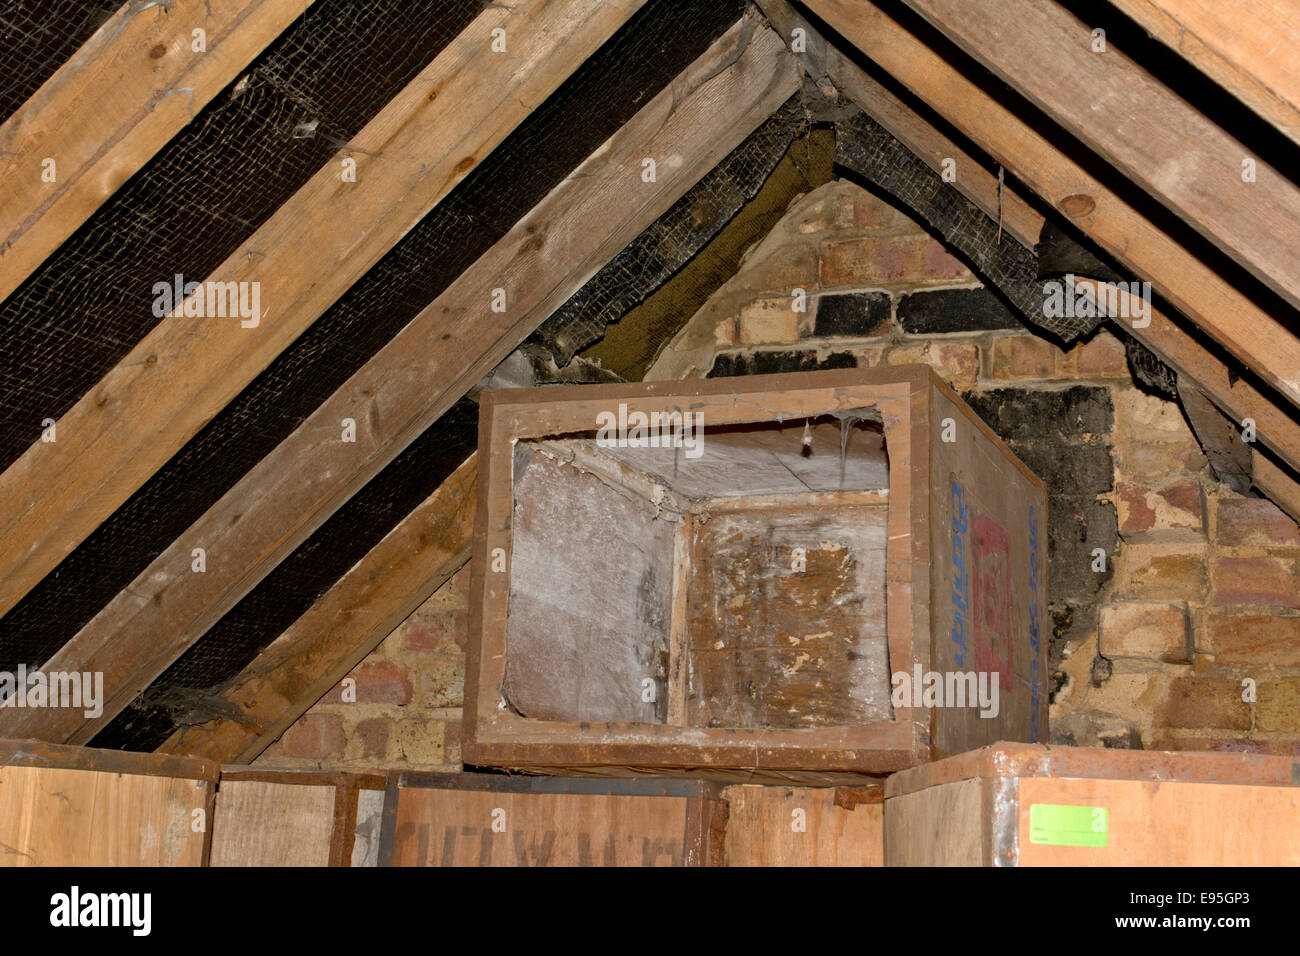 Empty tea chest in a house loft Stock Photo